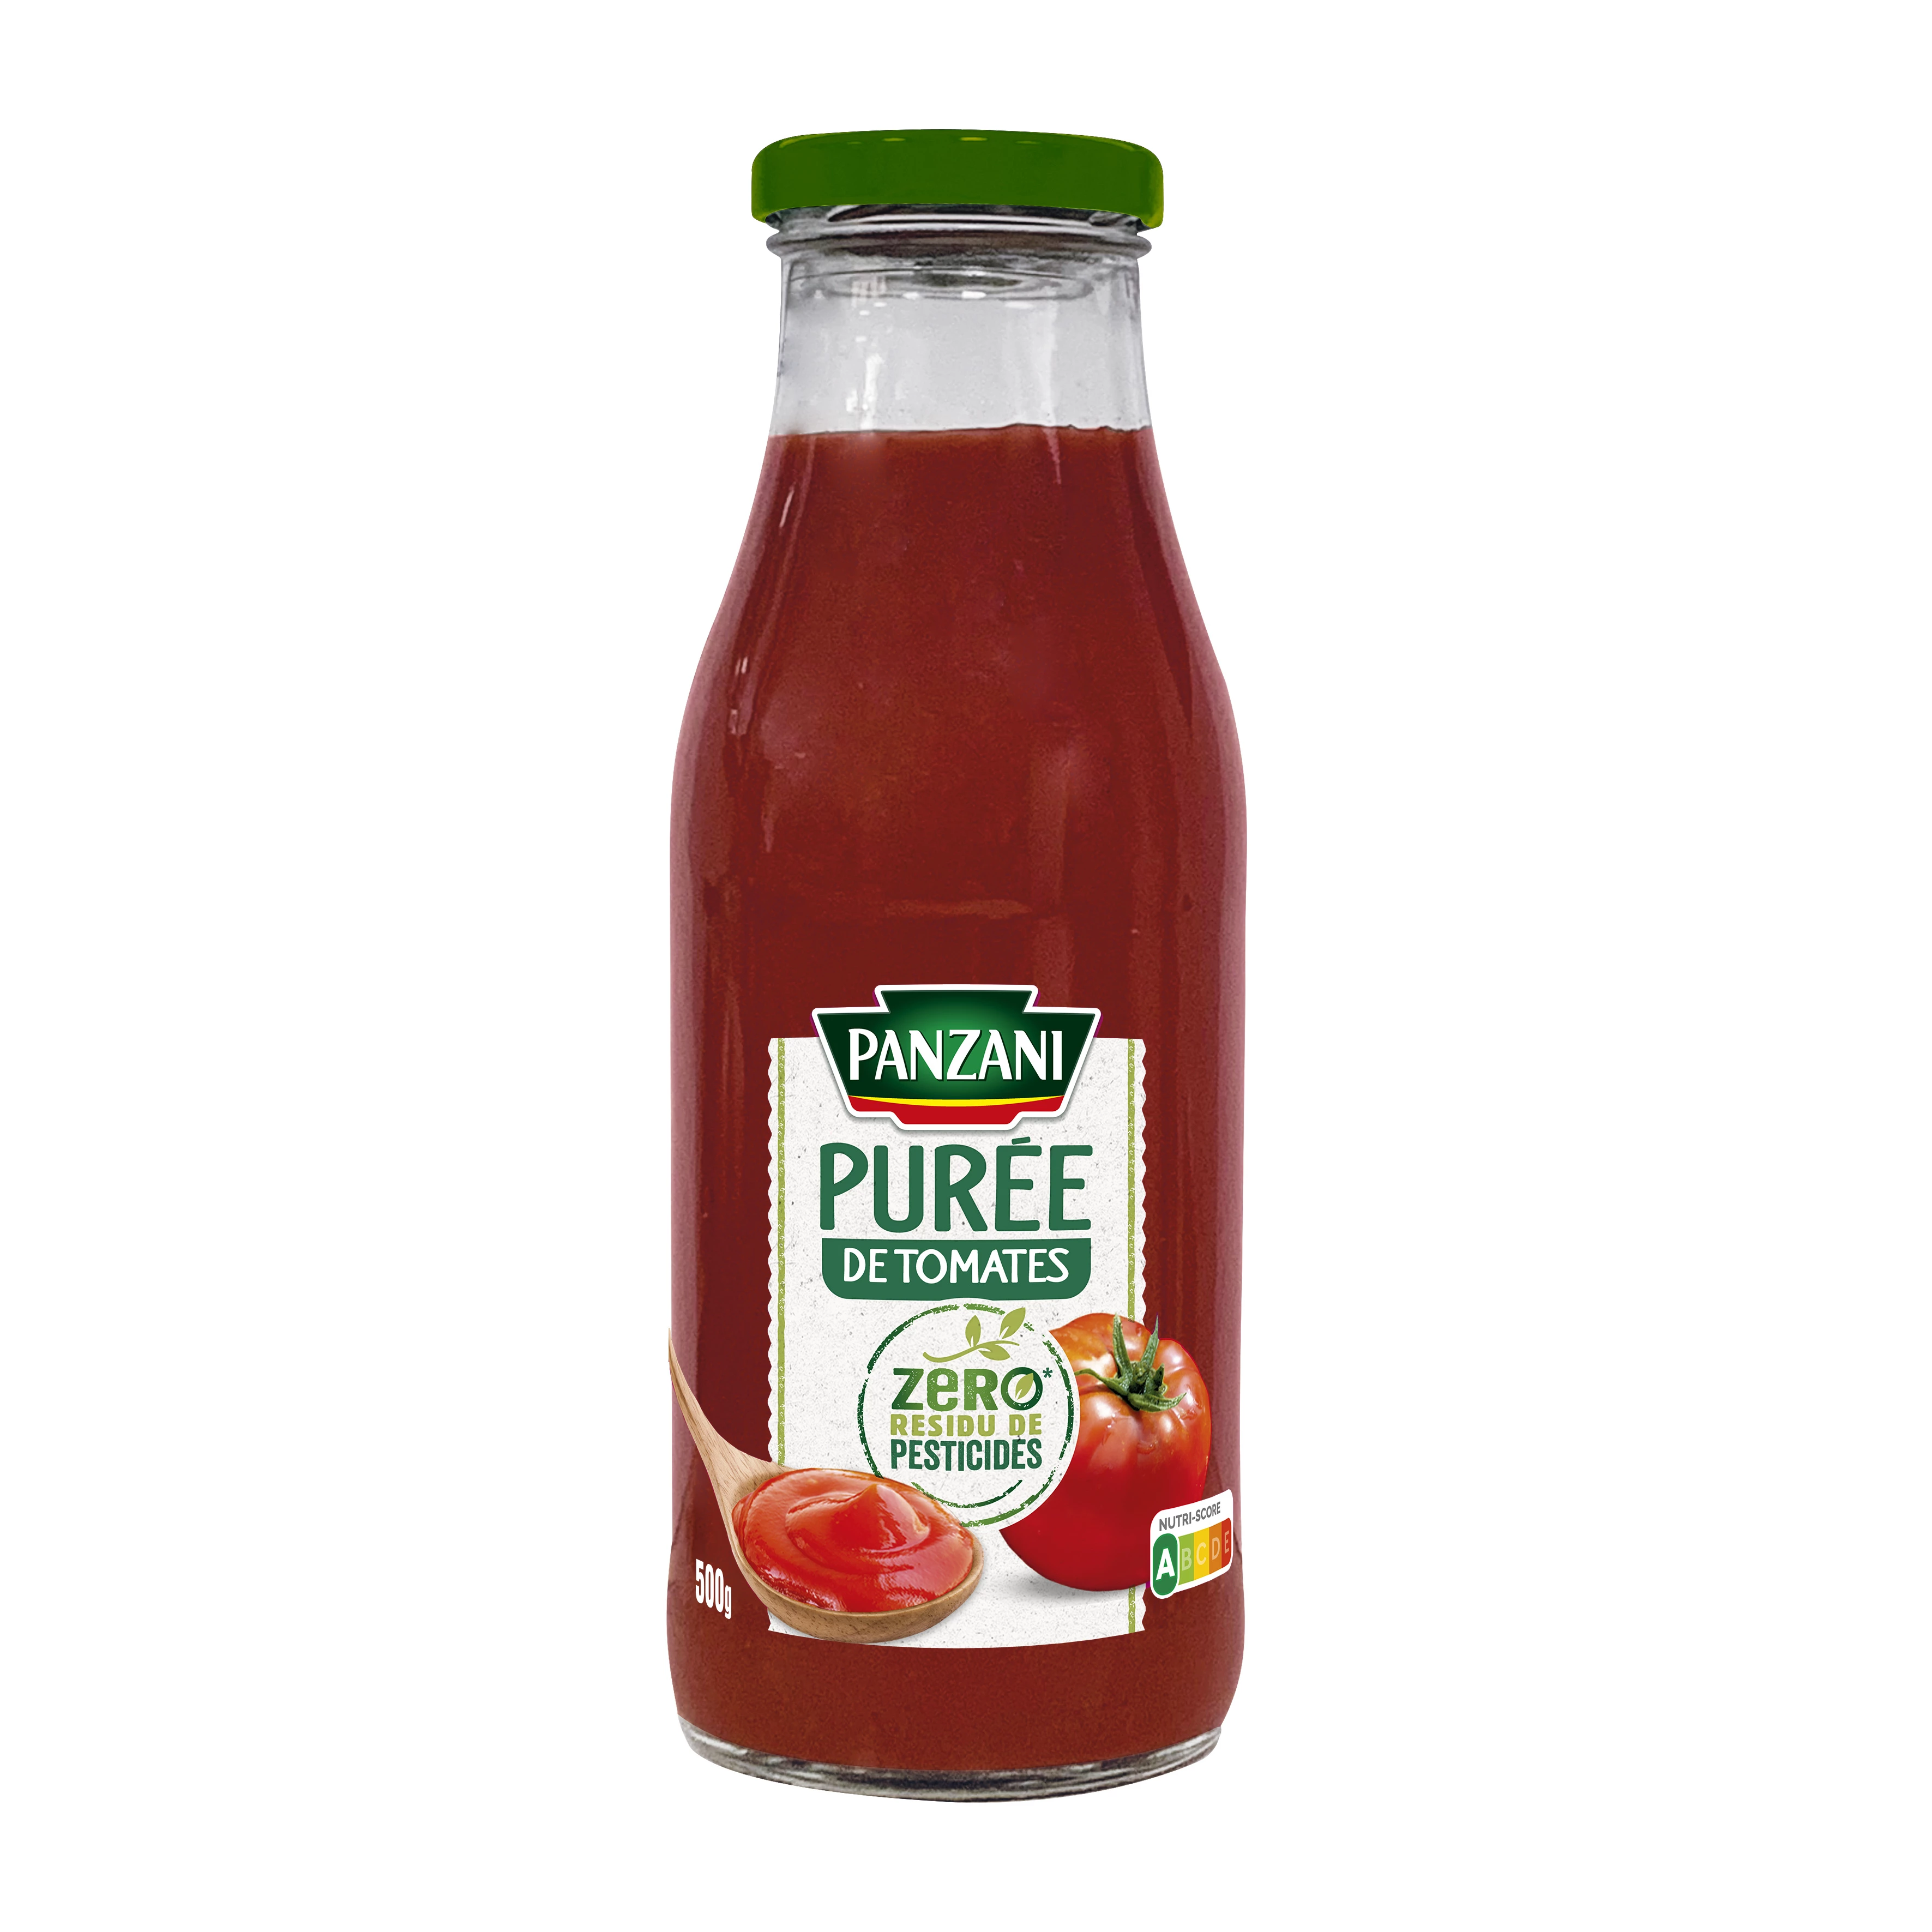 Pure de tomate; 500g - PANZANI